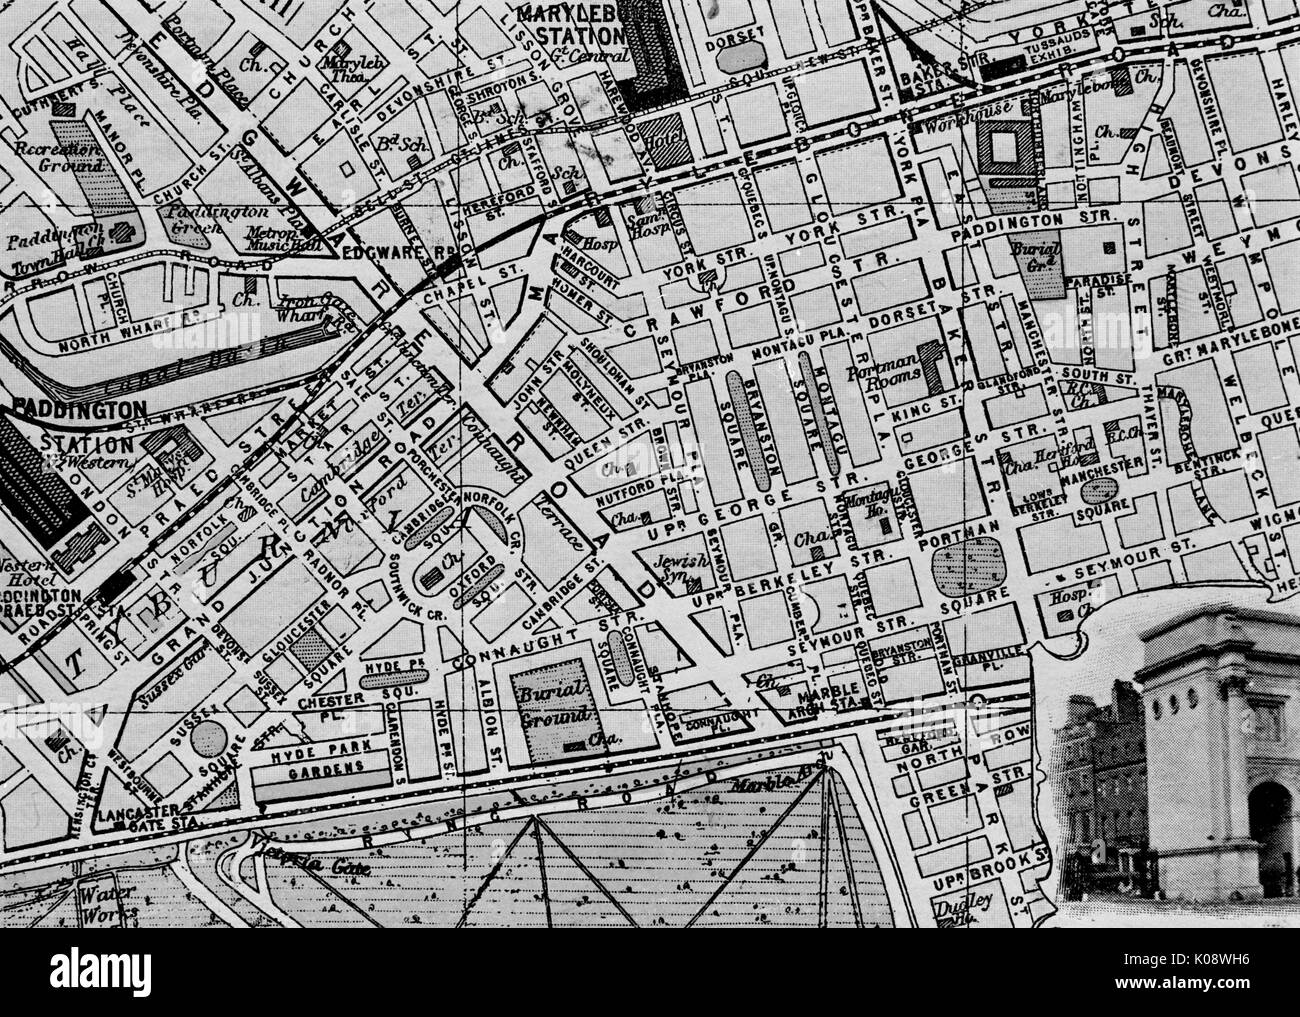 Karte der St. Marylebone, London. Datum: ca. 1900 Stockfoto